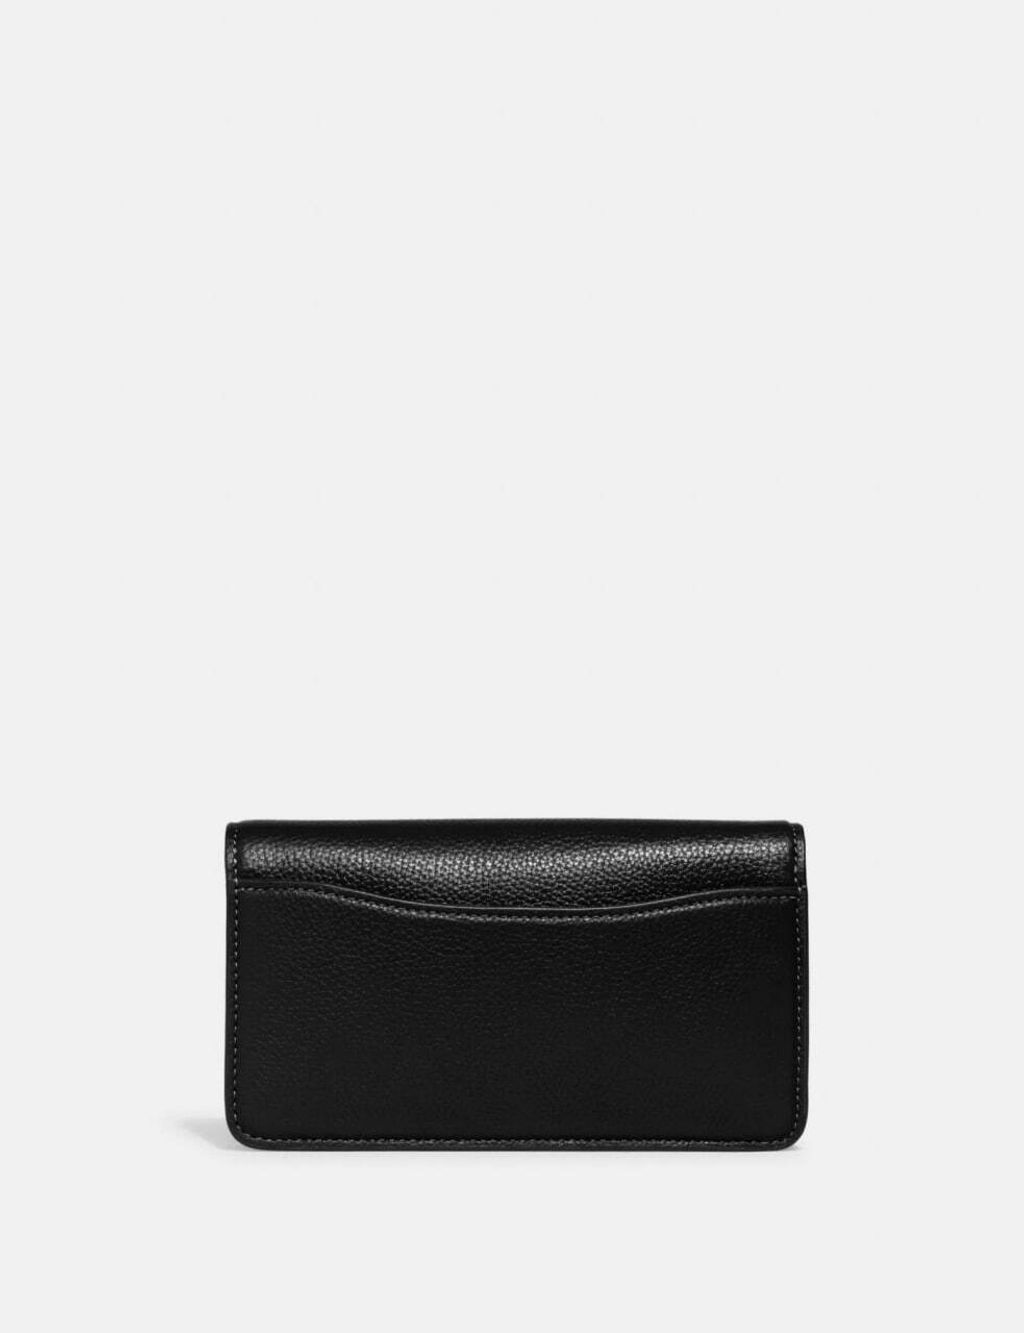 handbagbranded.com getlush outlet personalshopper usa malaysia ready stock coach Tabby Wristlet 10